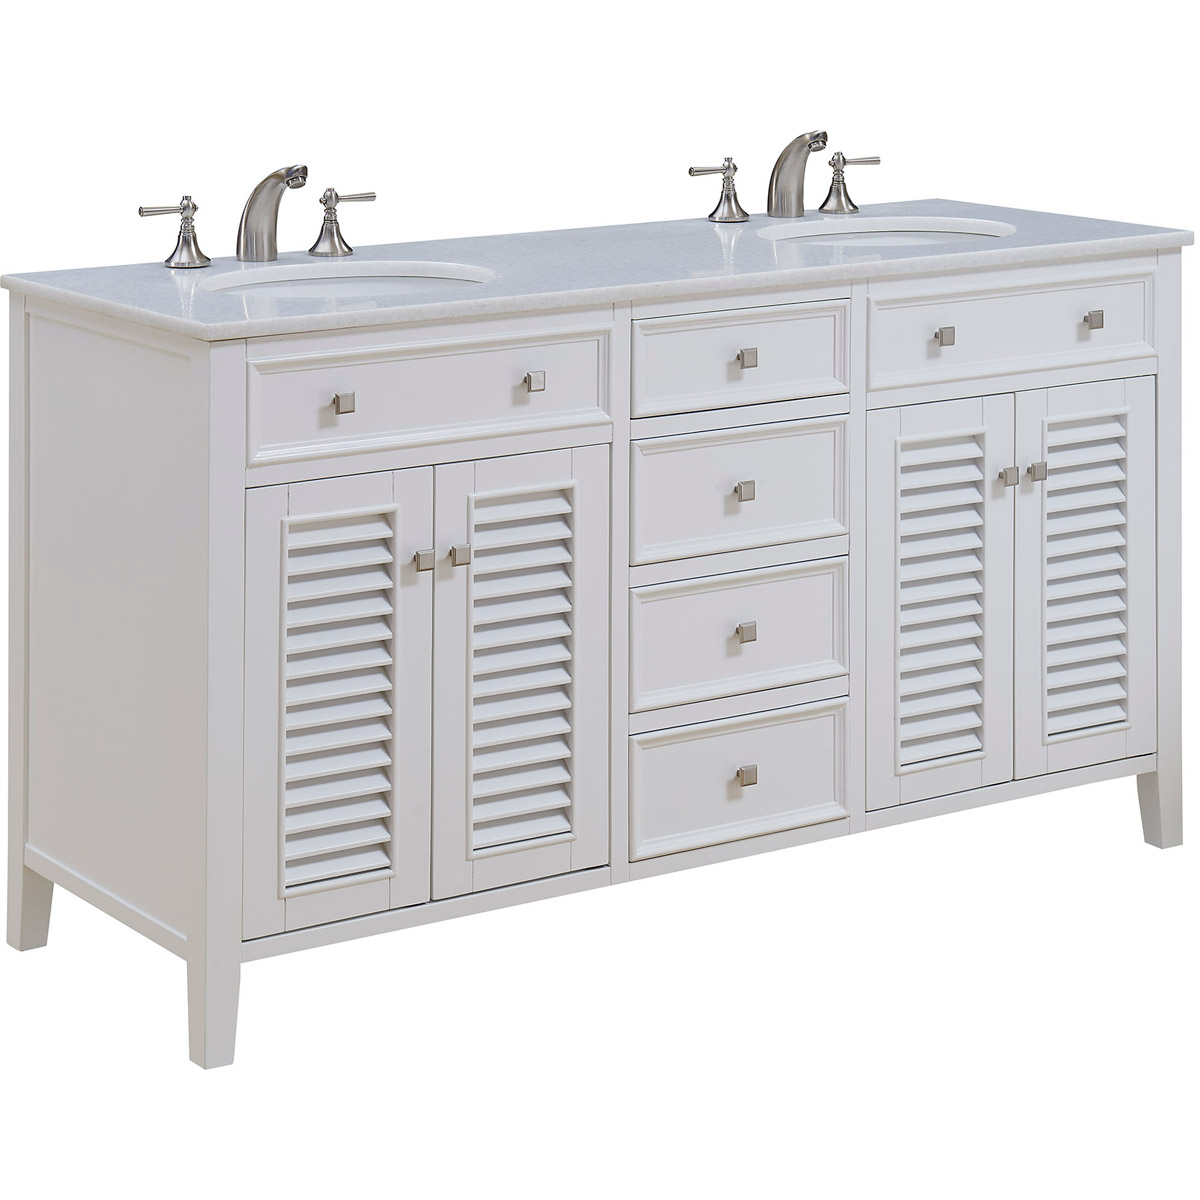 60 in. Double Bathroom Vanity Set, White -  Convenience Concepts, HI276495